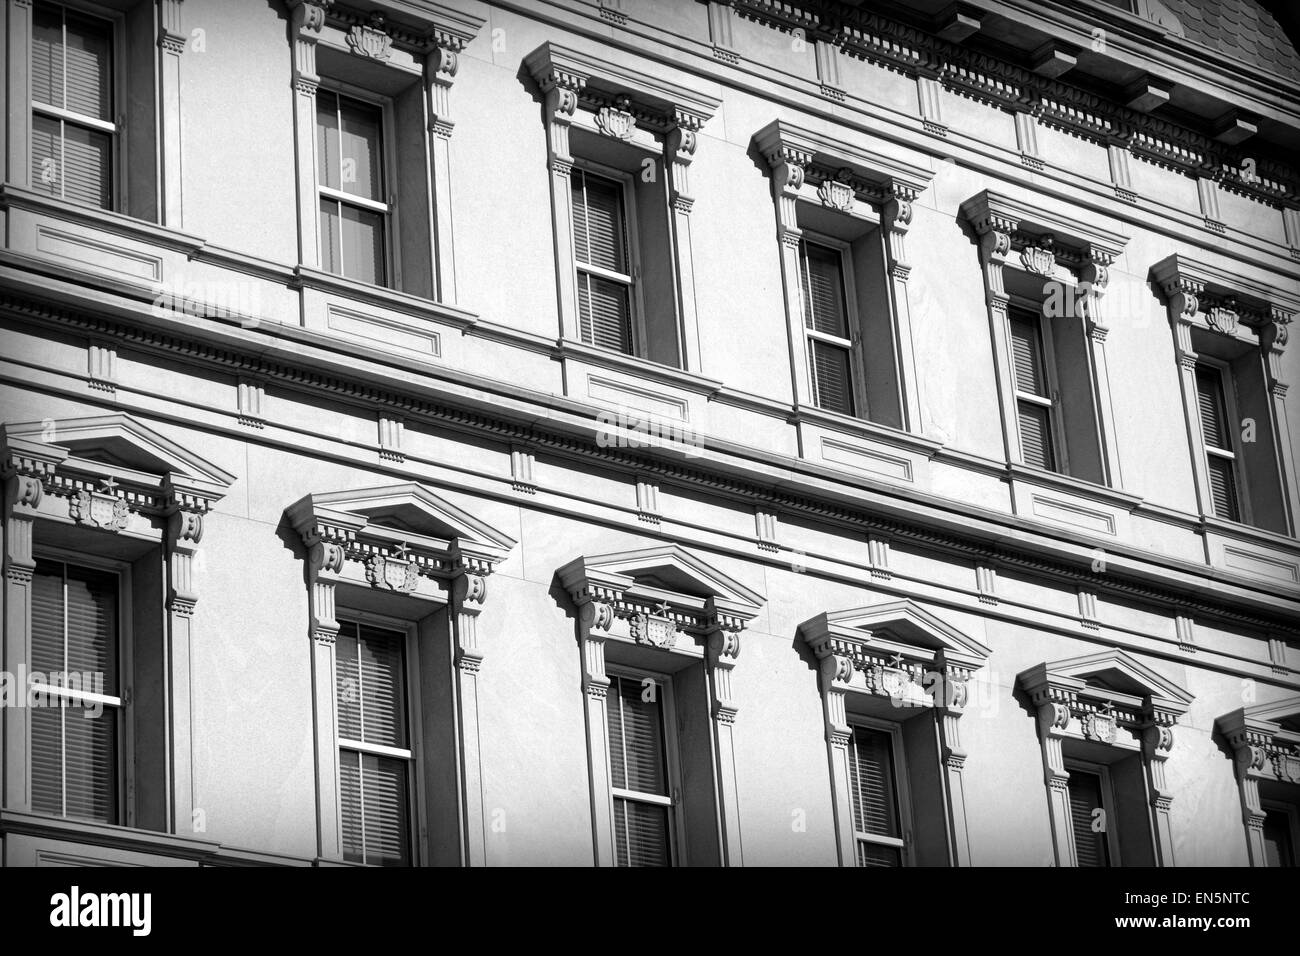 Historical building facade with windows in Washington DC Stock Photo